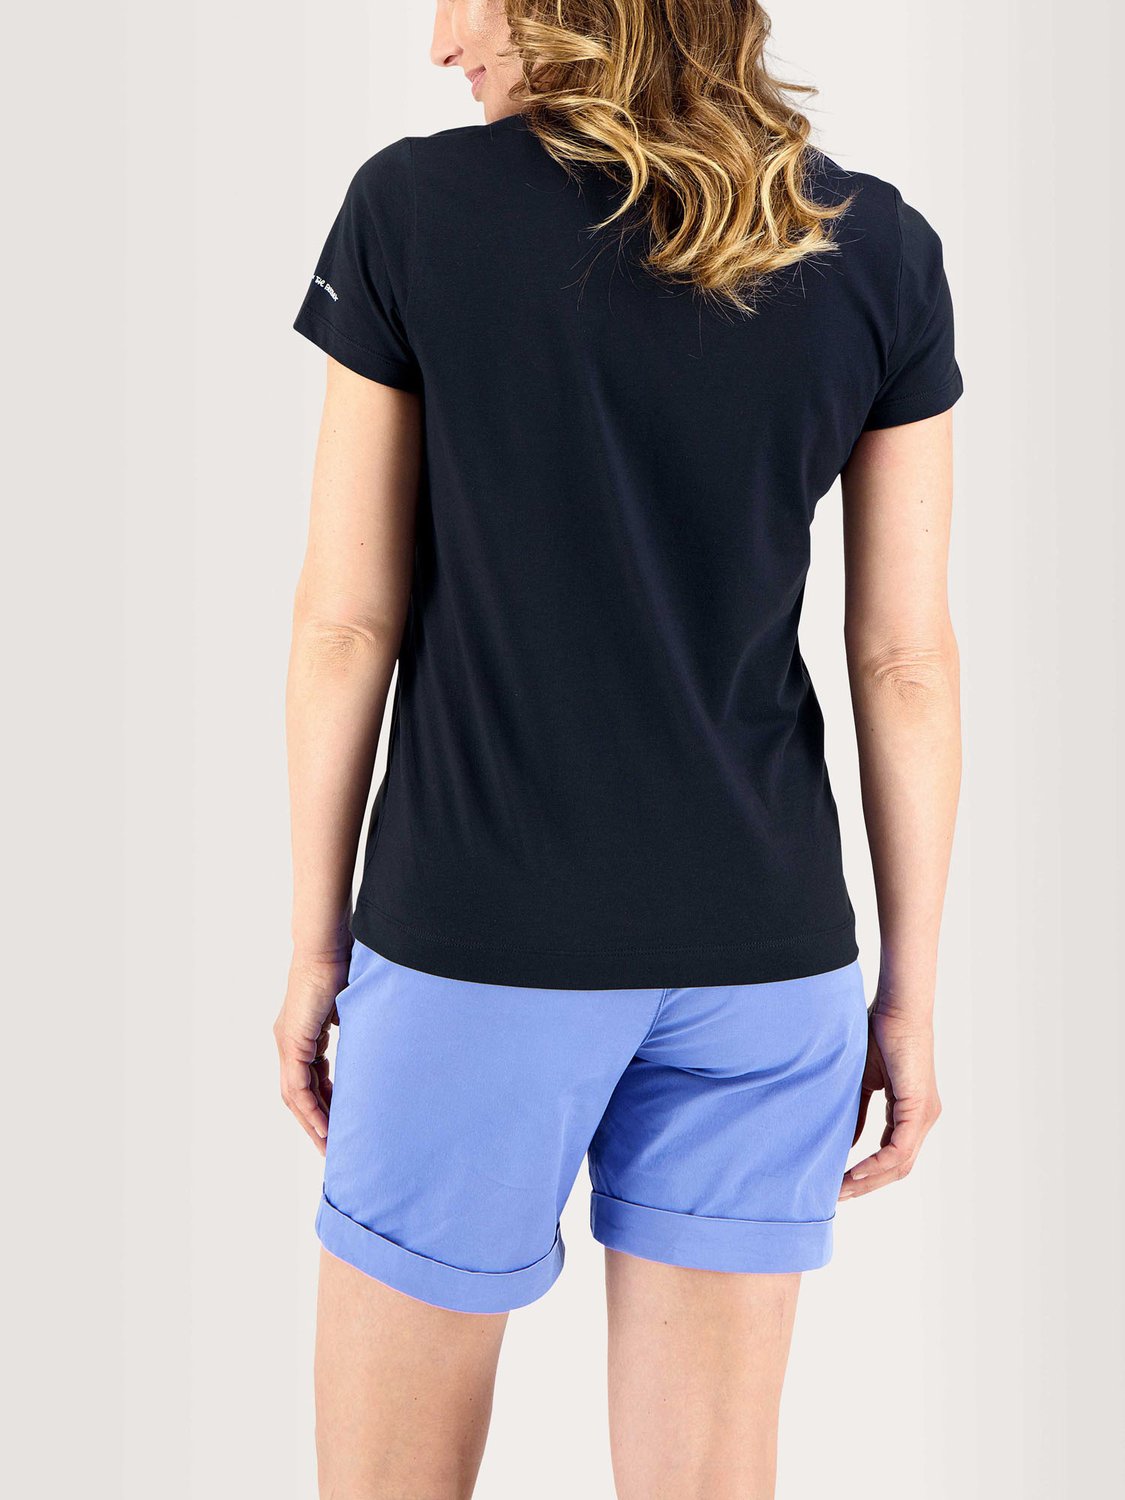 Tee Shirt Femme A Motif Coton Biologique Marine